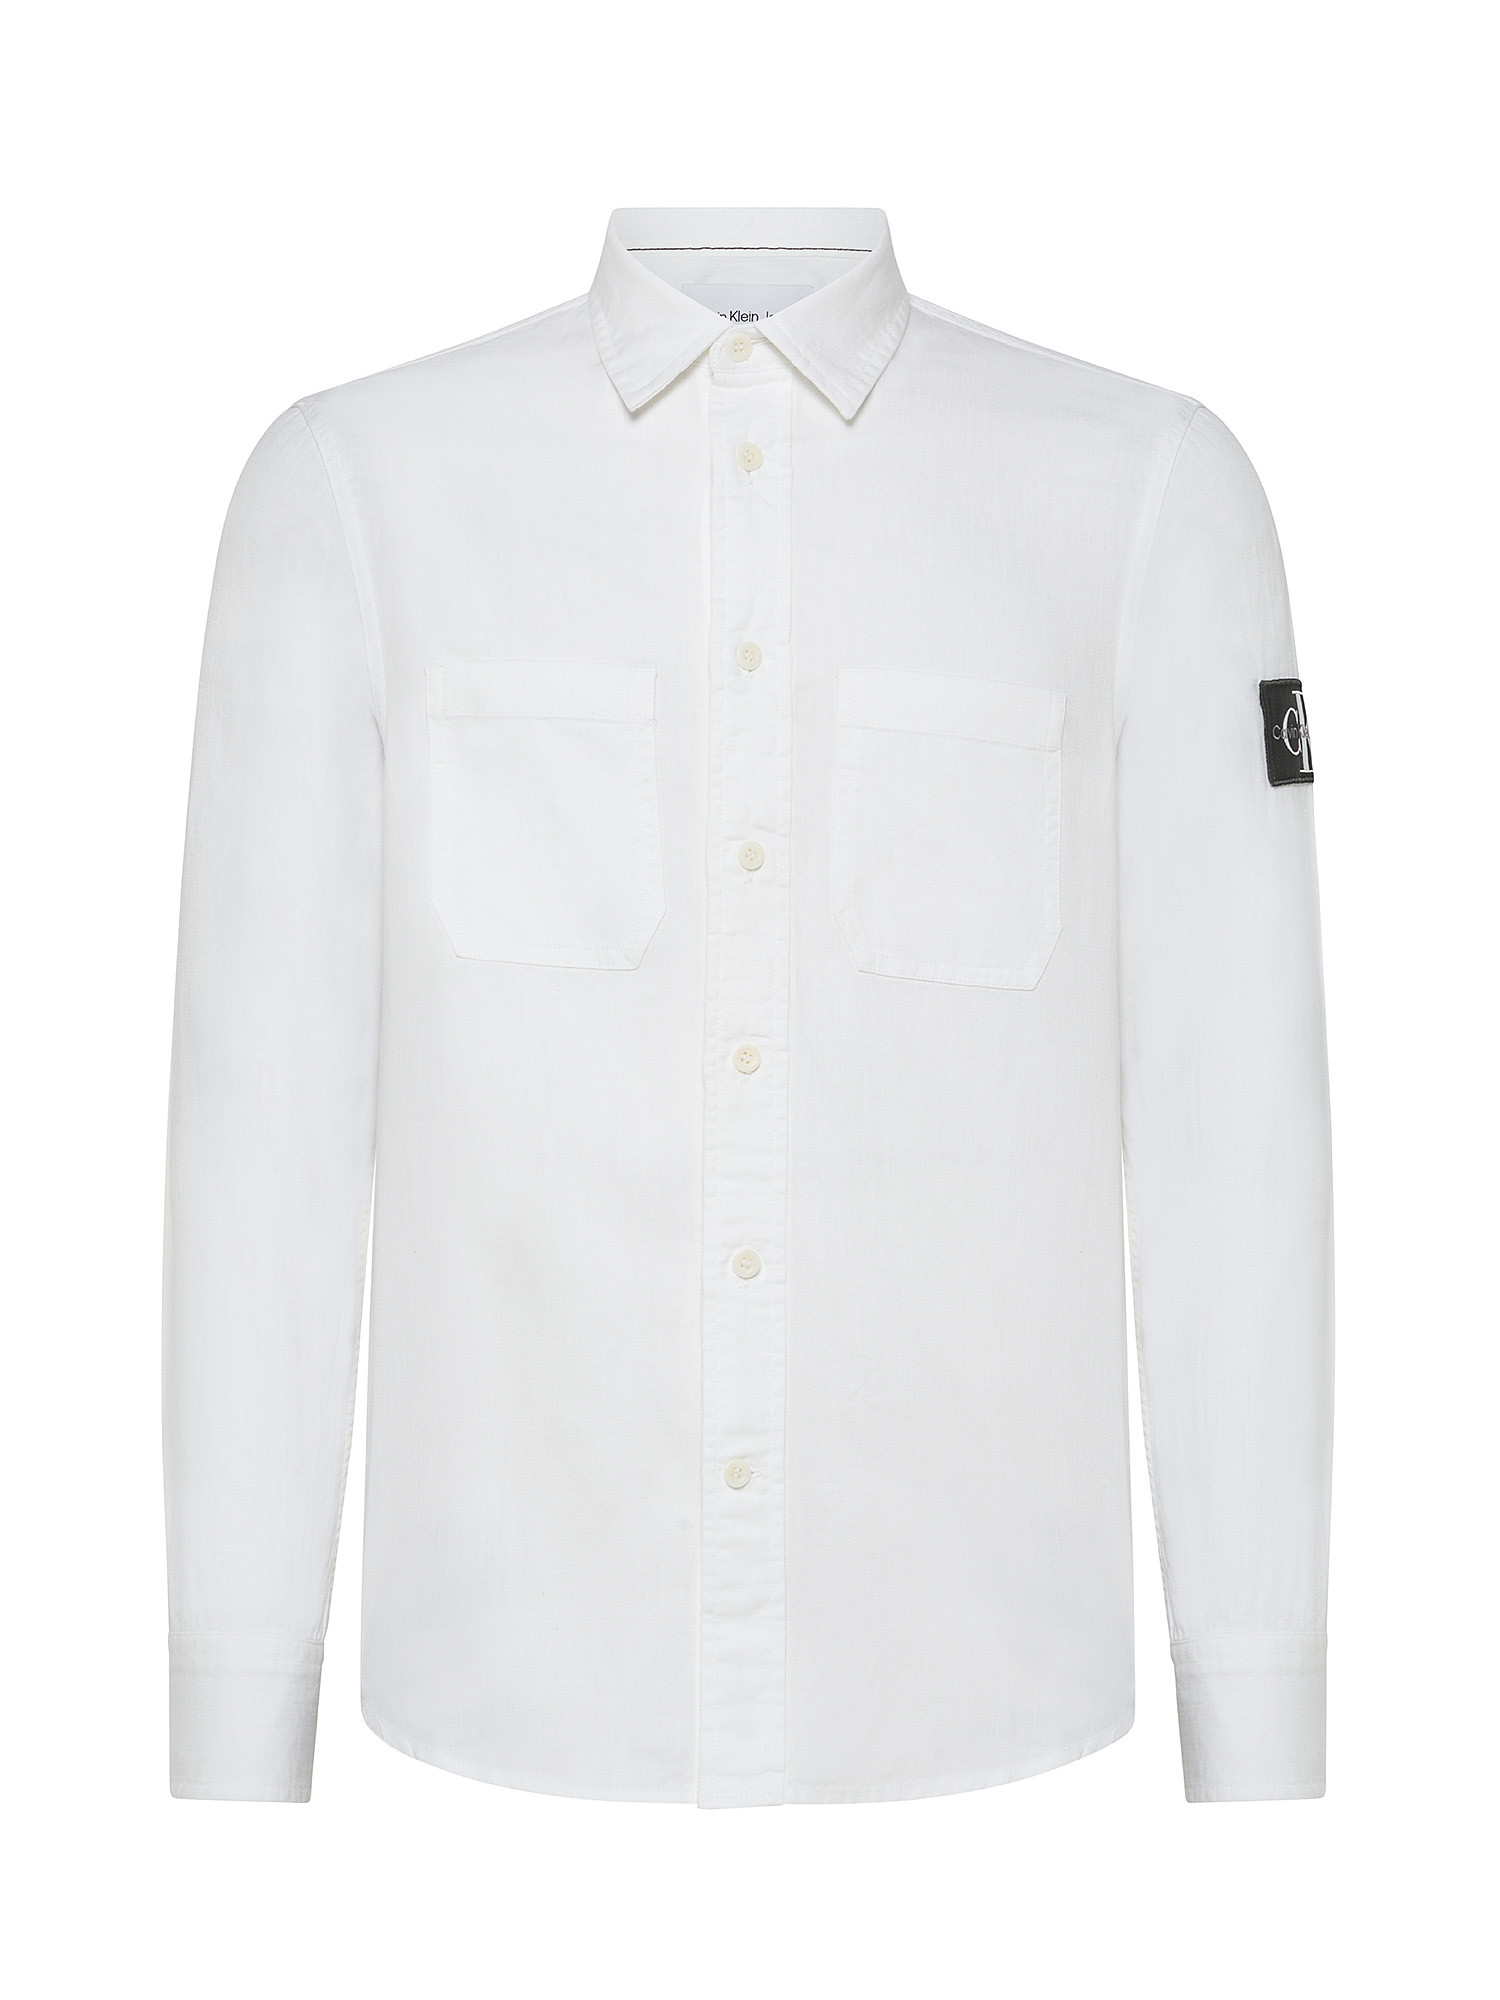 Calvin Klein Jeans - Camicia con doppia tasca, Bianco, large image number 0